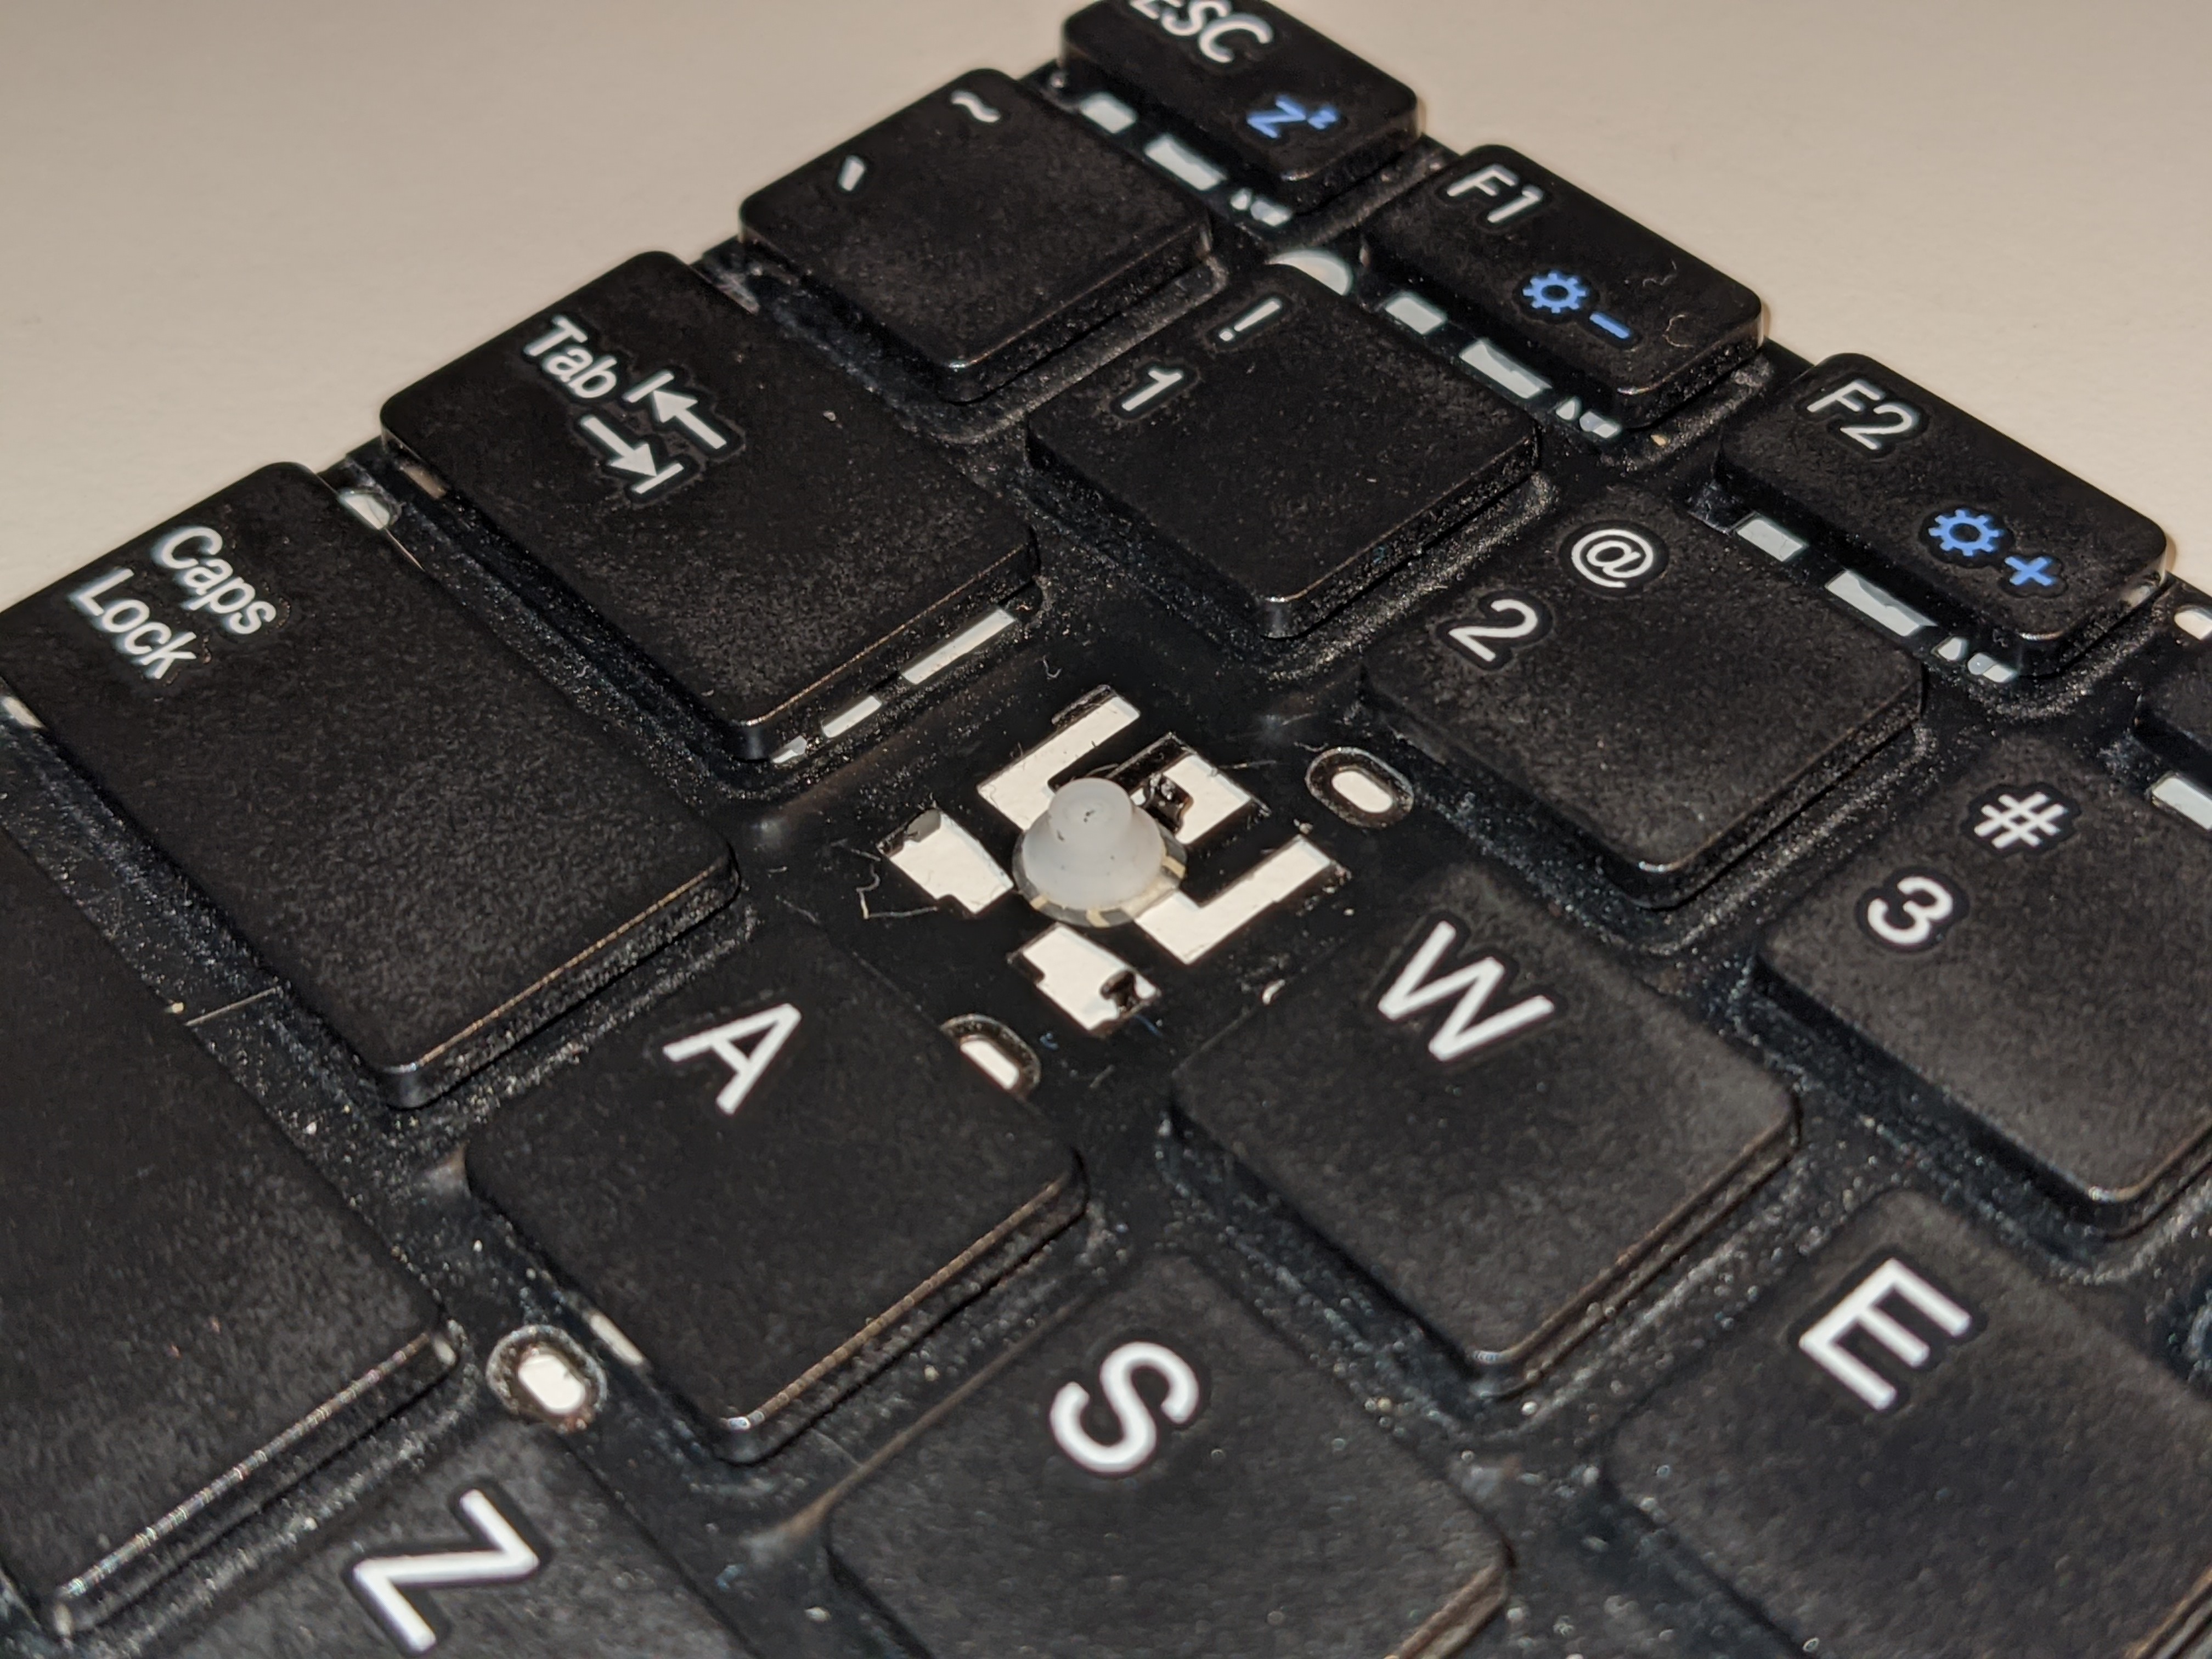 pinebookpro keyboard key removed